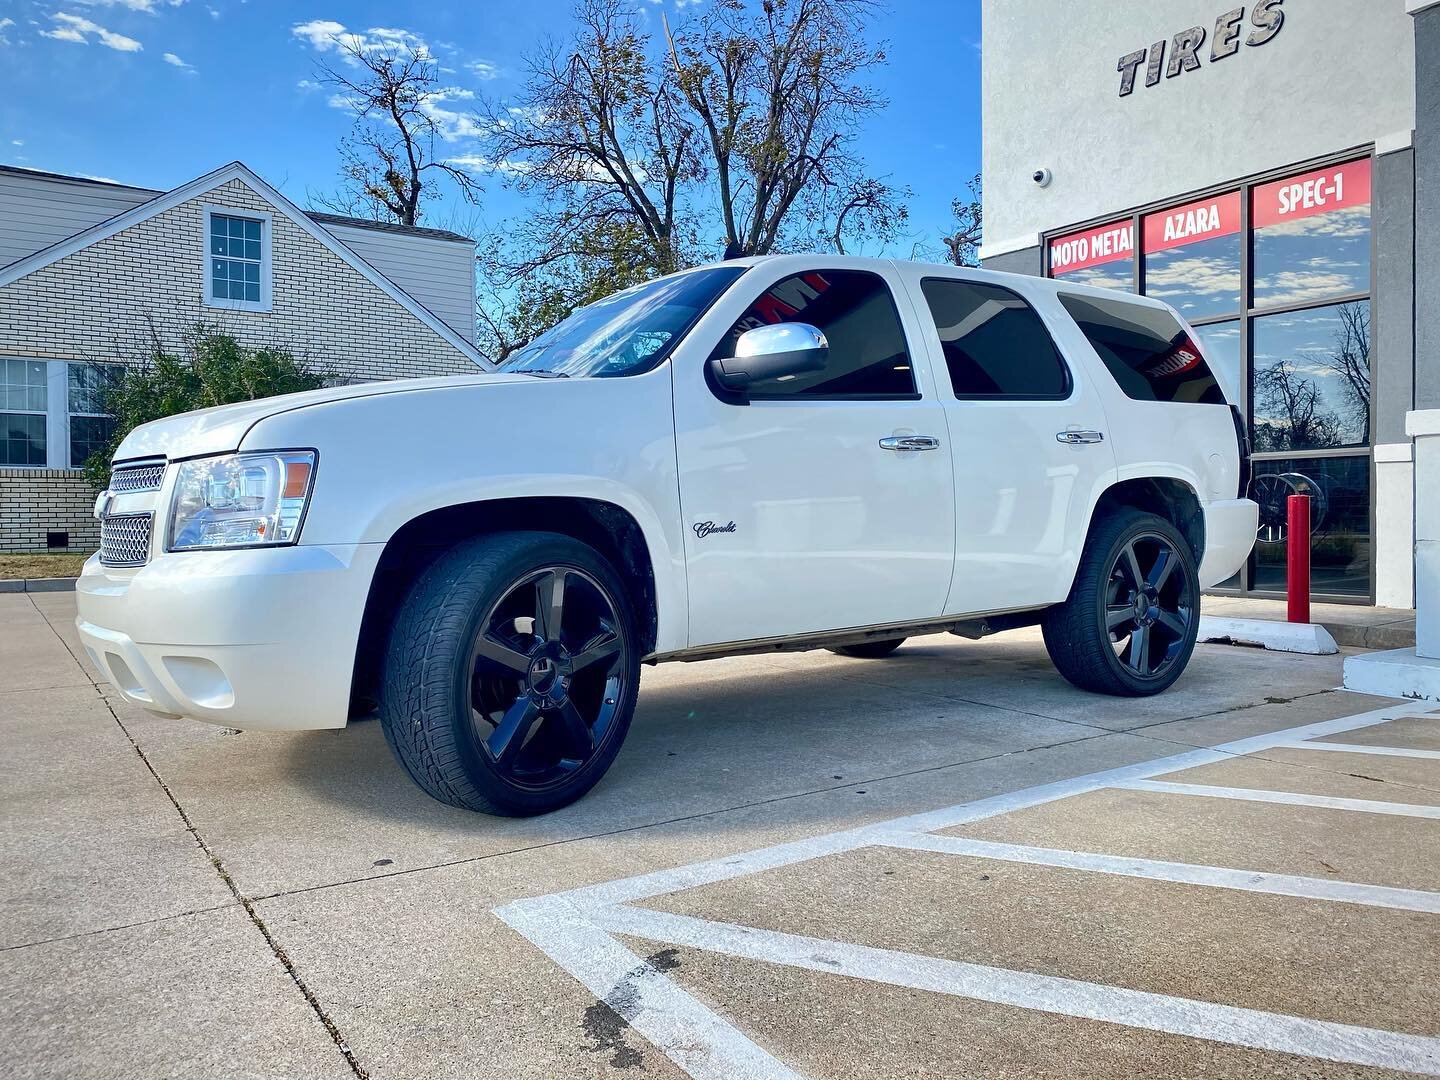 Gloss black replica wheels on this white and black Chevy Tahoe🤤
.
.
.
.
.
.
.
.
.
.
.
.
#chevytahoe #wheelreplicas #chevy #chevrolet #nexentires #nexen #okc #oklahomacity #rnrtiresexpress #rims #wheels